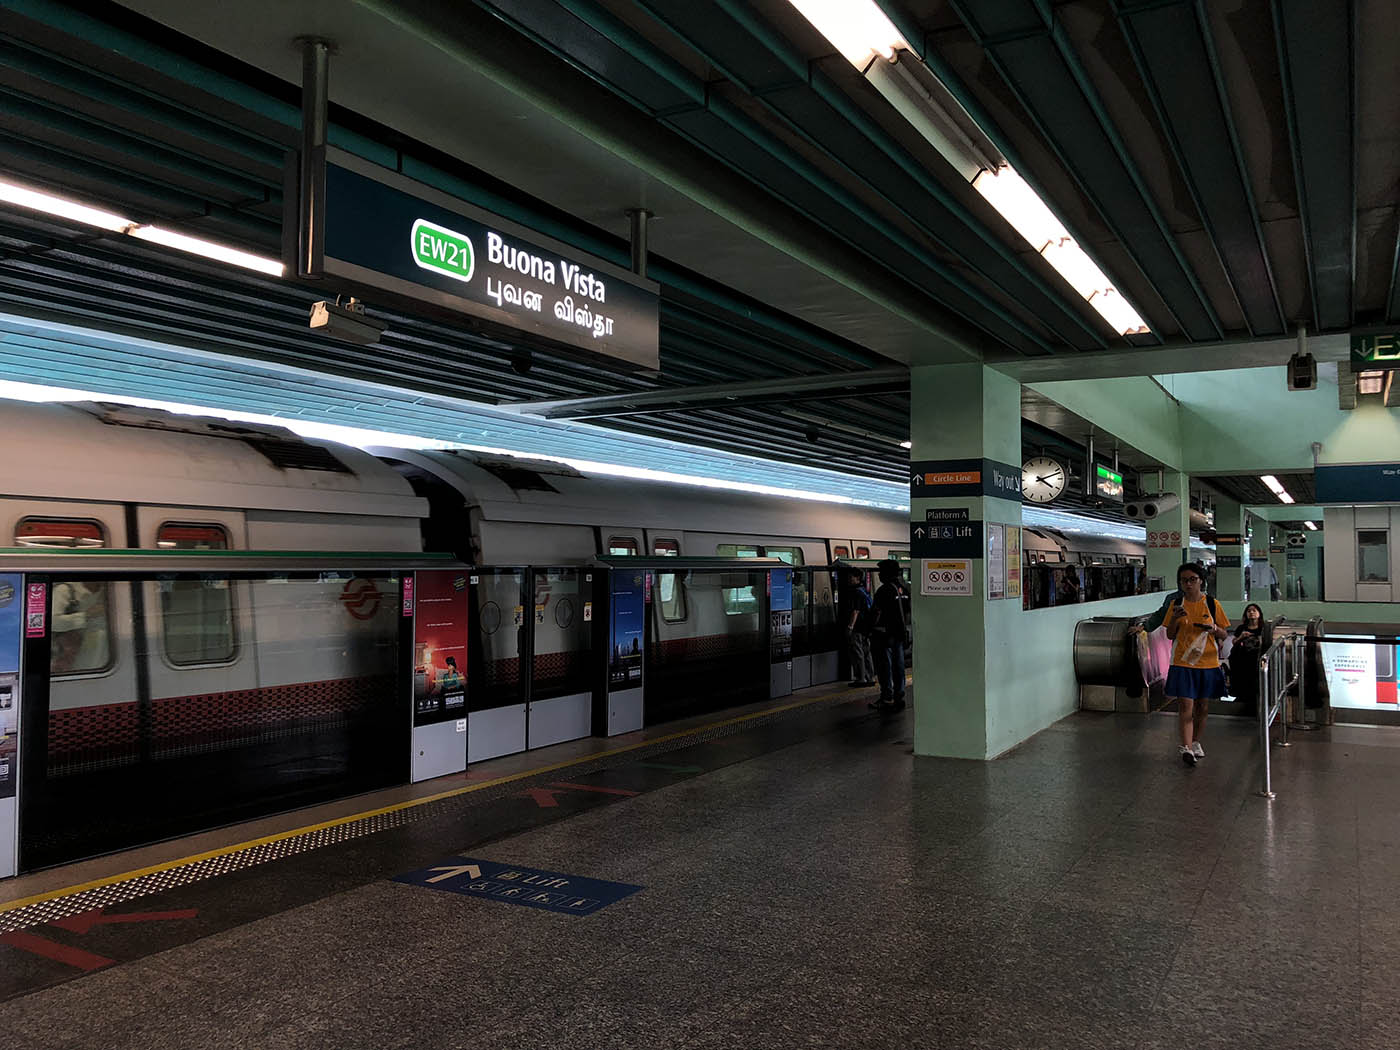 Buona Vista MRT Station - - EW21 Platform